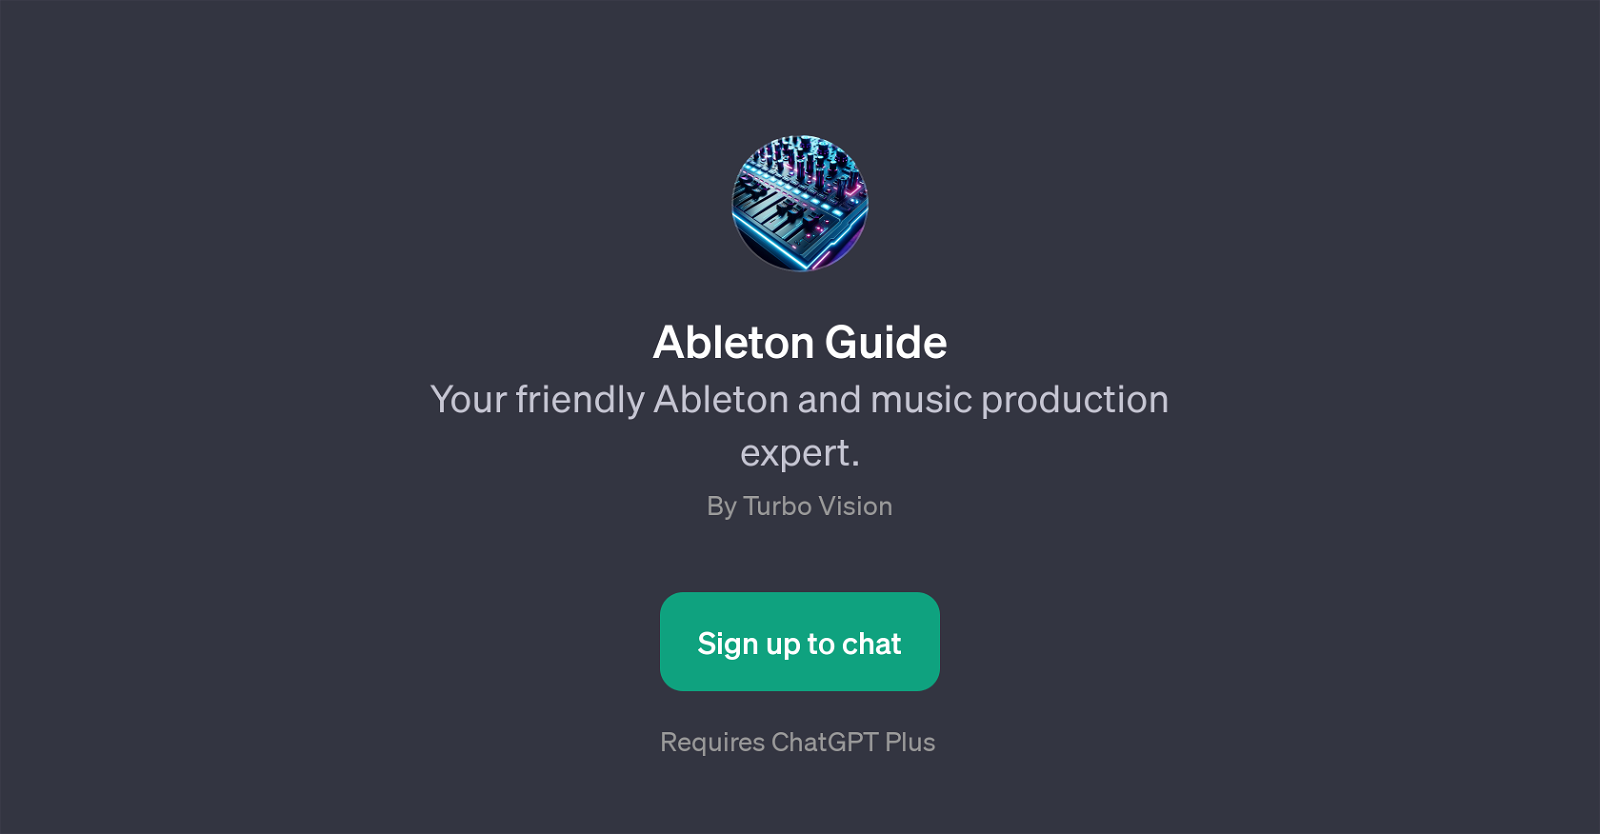 Ableton Guide website